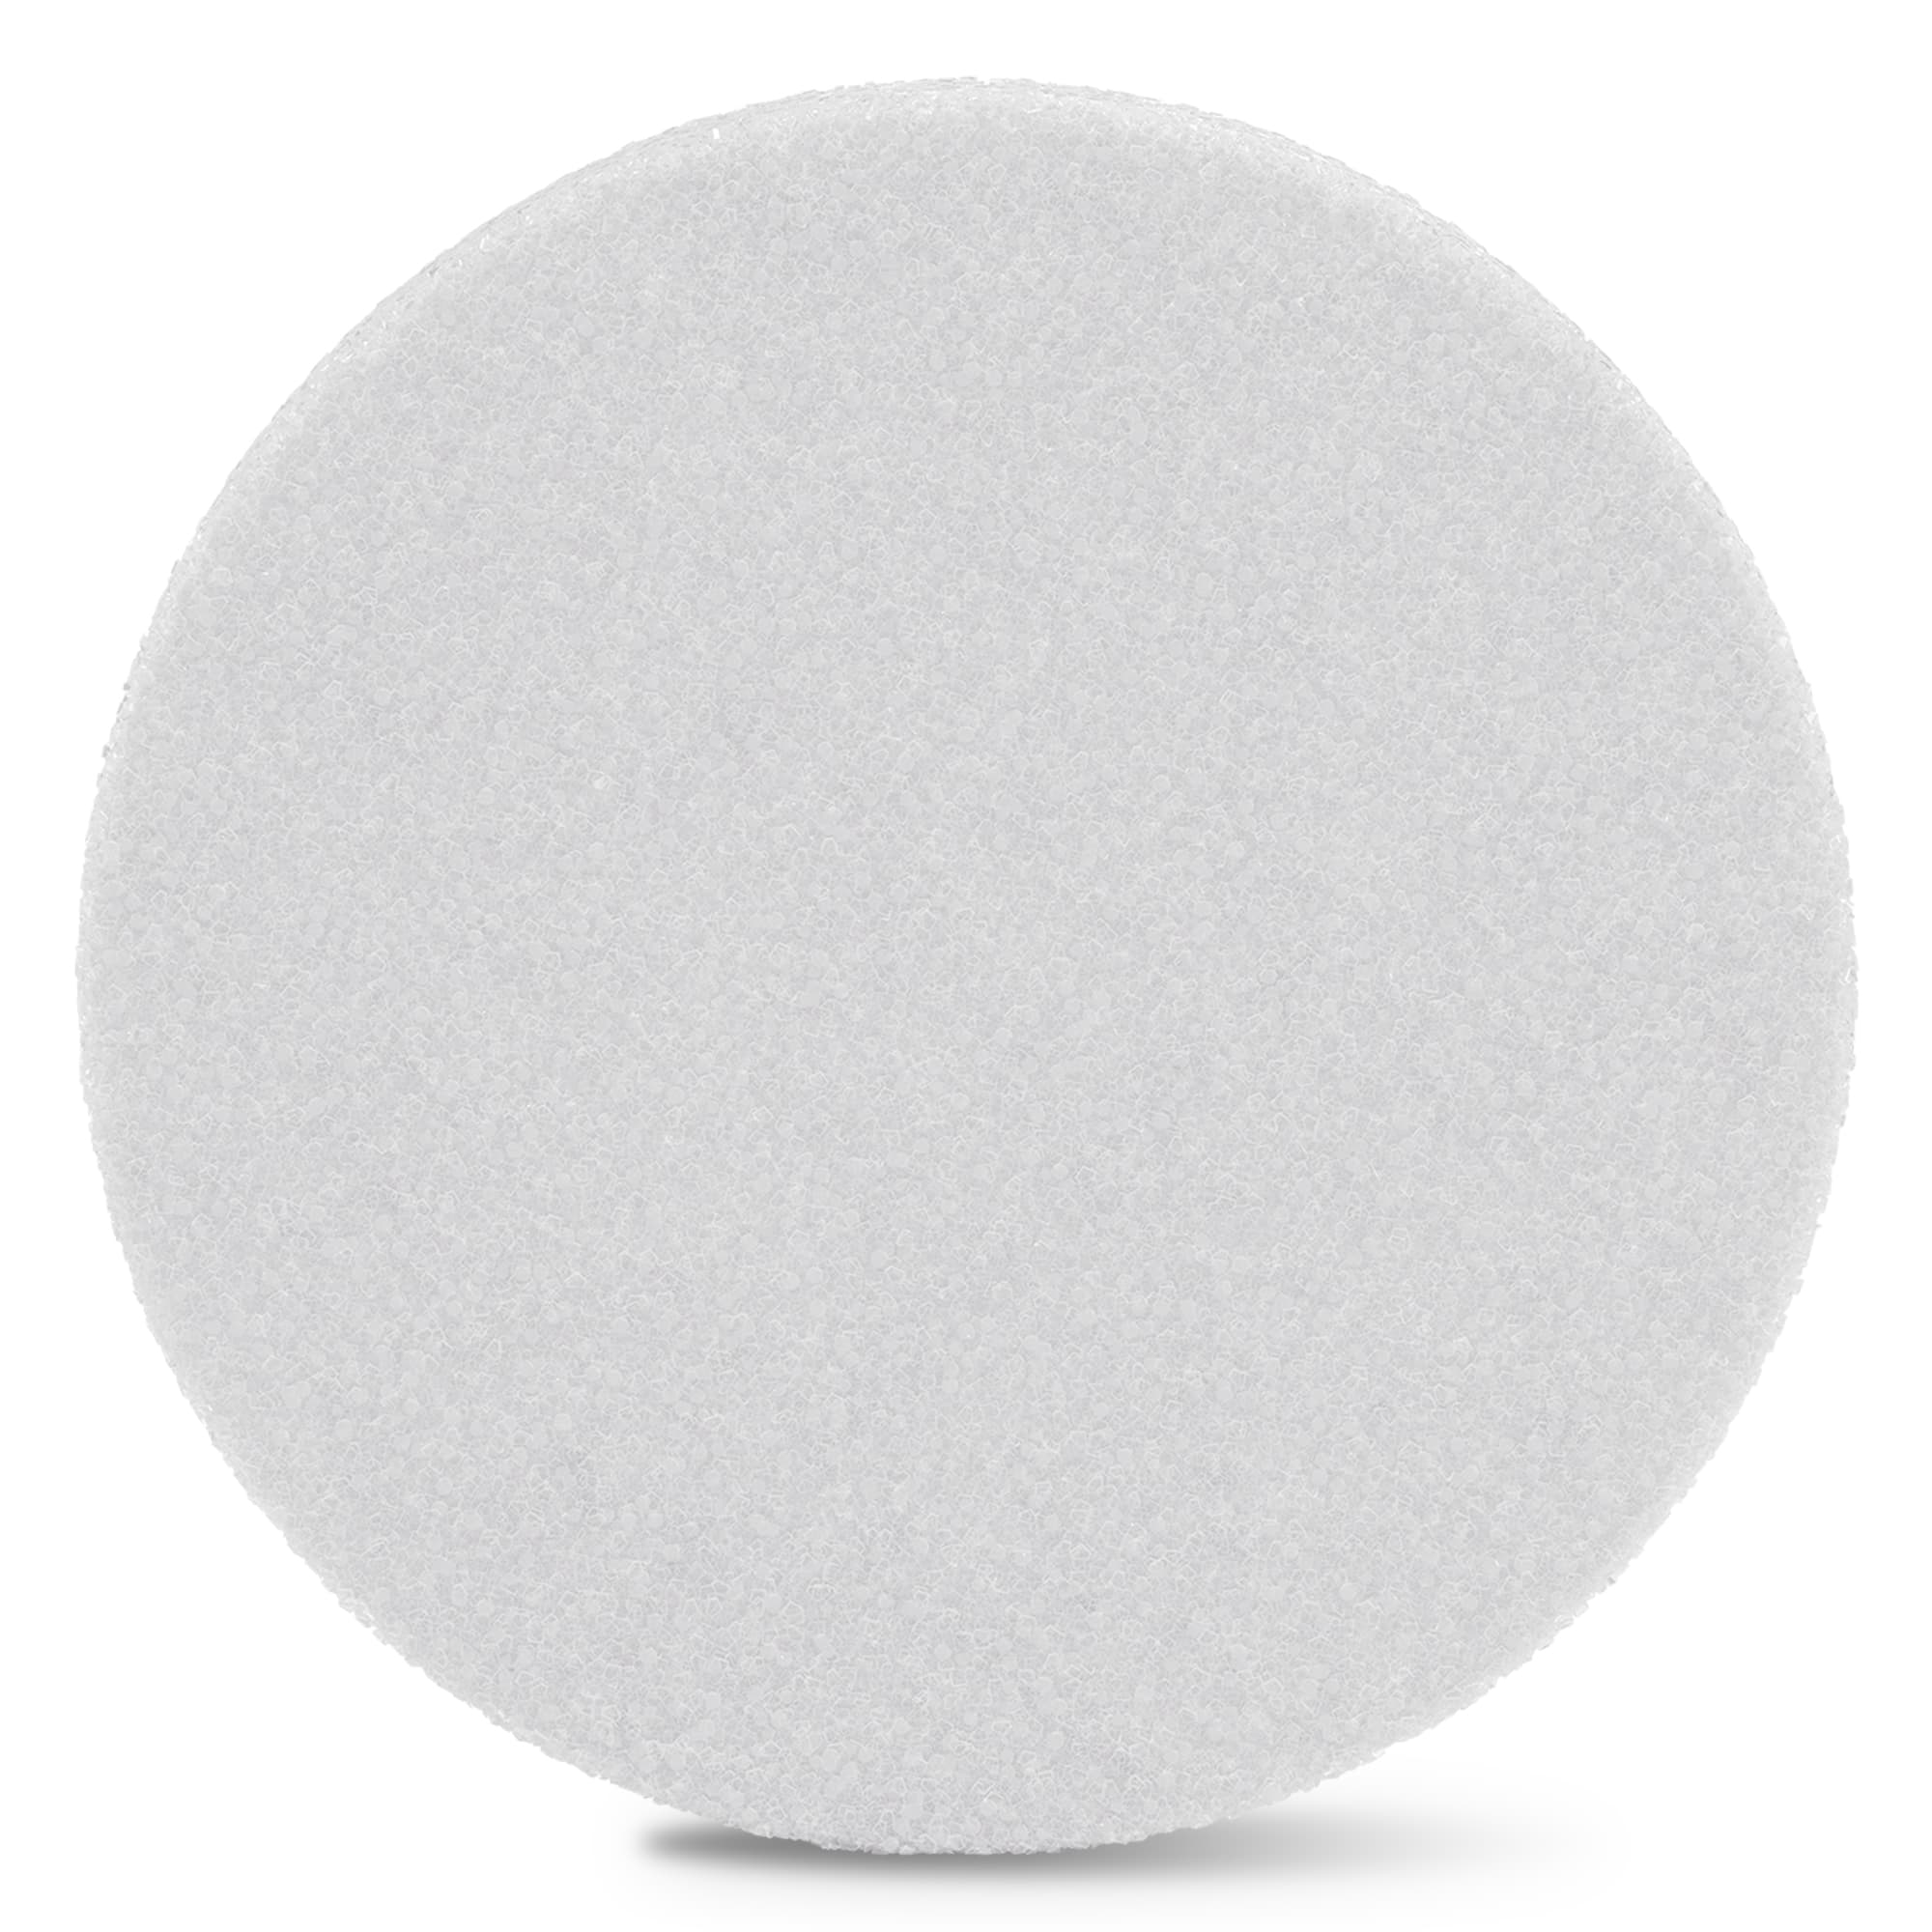 Floracraft Styrofoam Disc, 9 inch x 1-1/4 inch, White